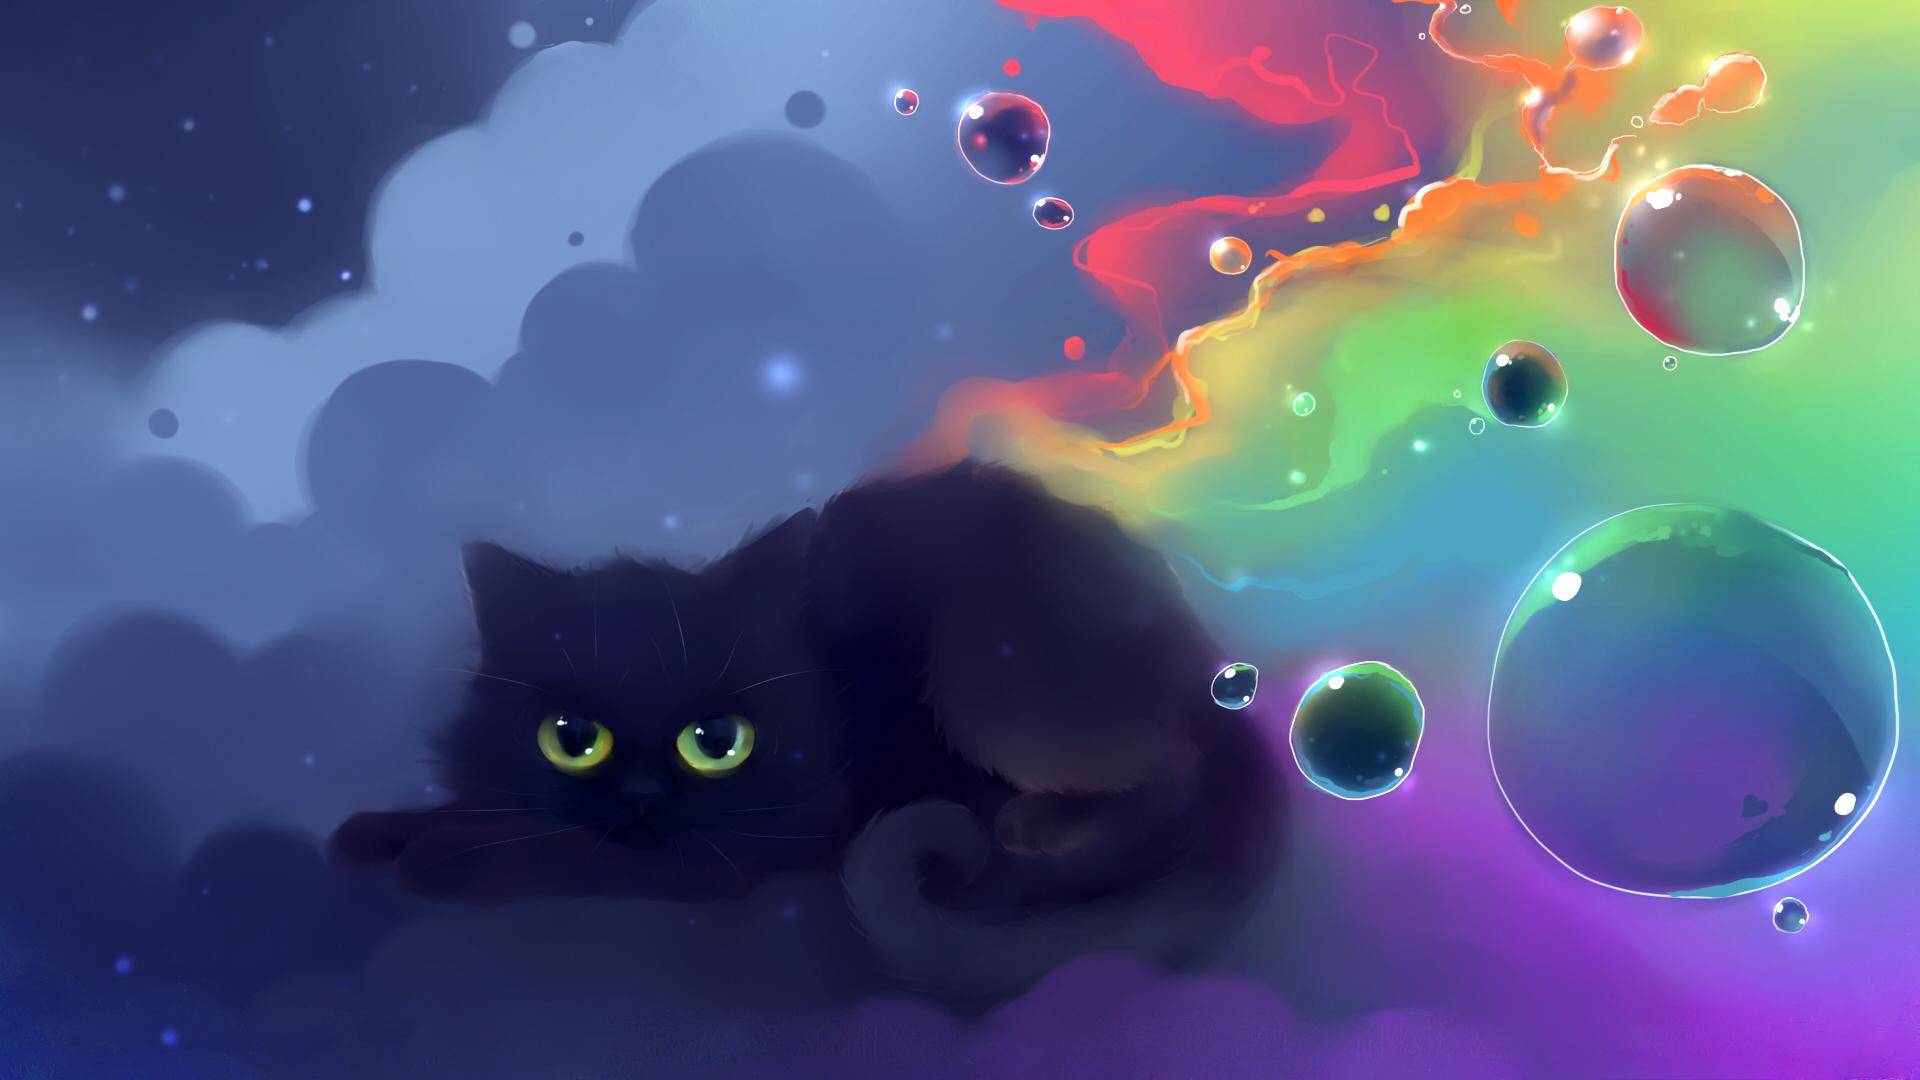 Nyan Cat Wallpaper Free Download